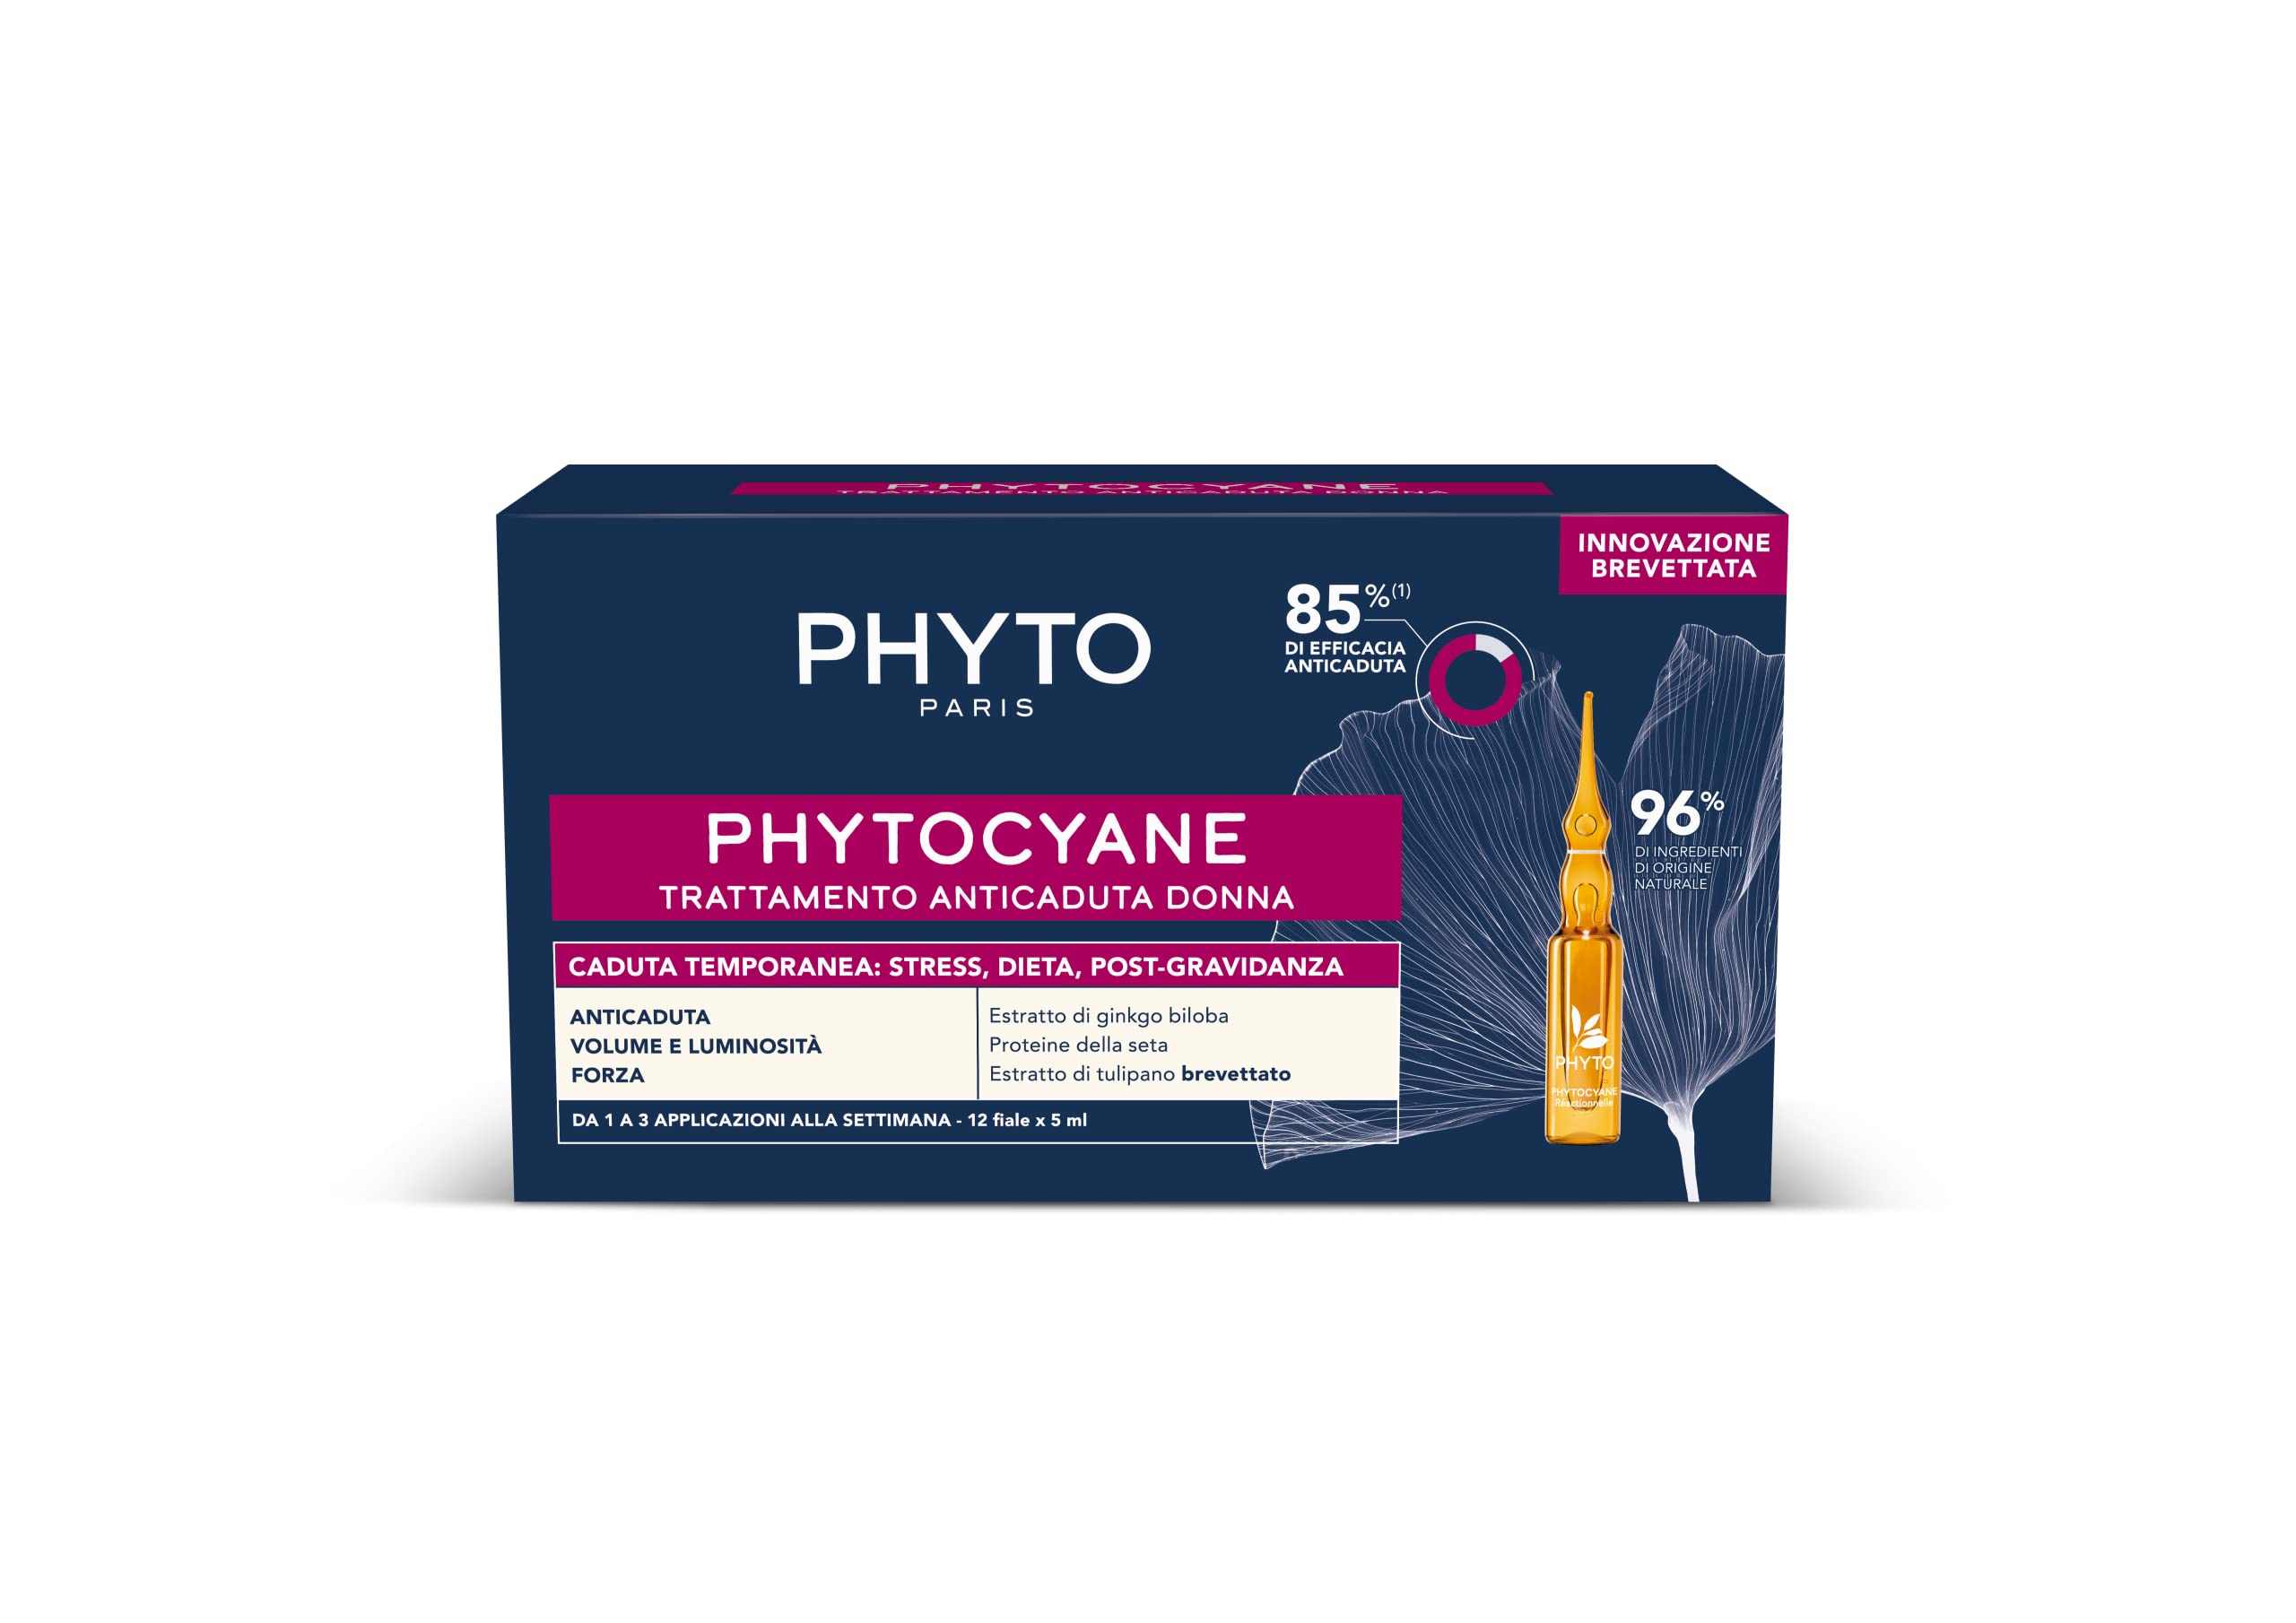 Phytocyane Kur reaktioneller Haarausfall Frauen, 12X5 ml